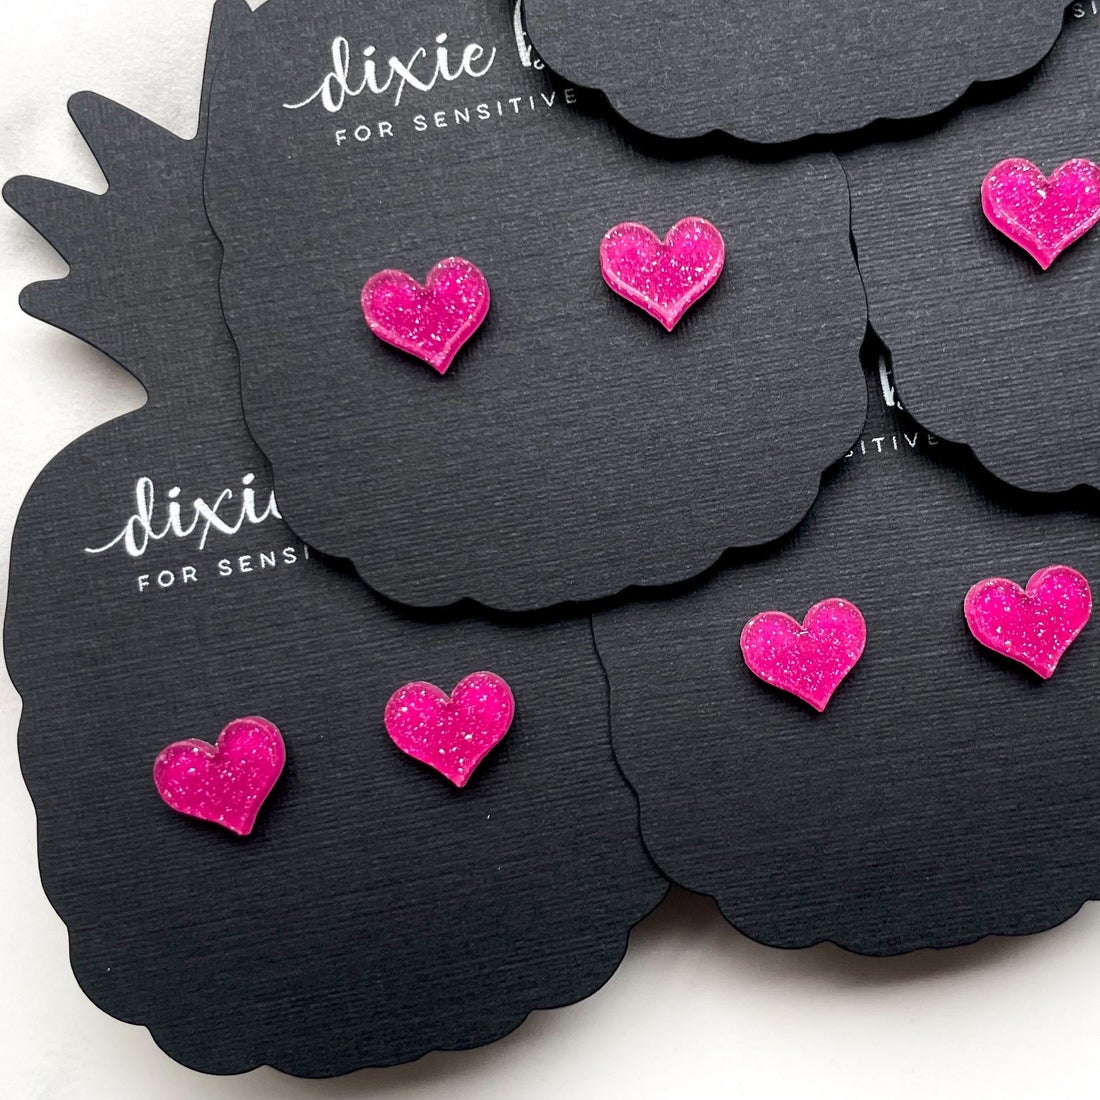 Dixie Bliss Earrings: Love Micro Confetti Hearts in Raspberry Shimmer